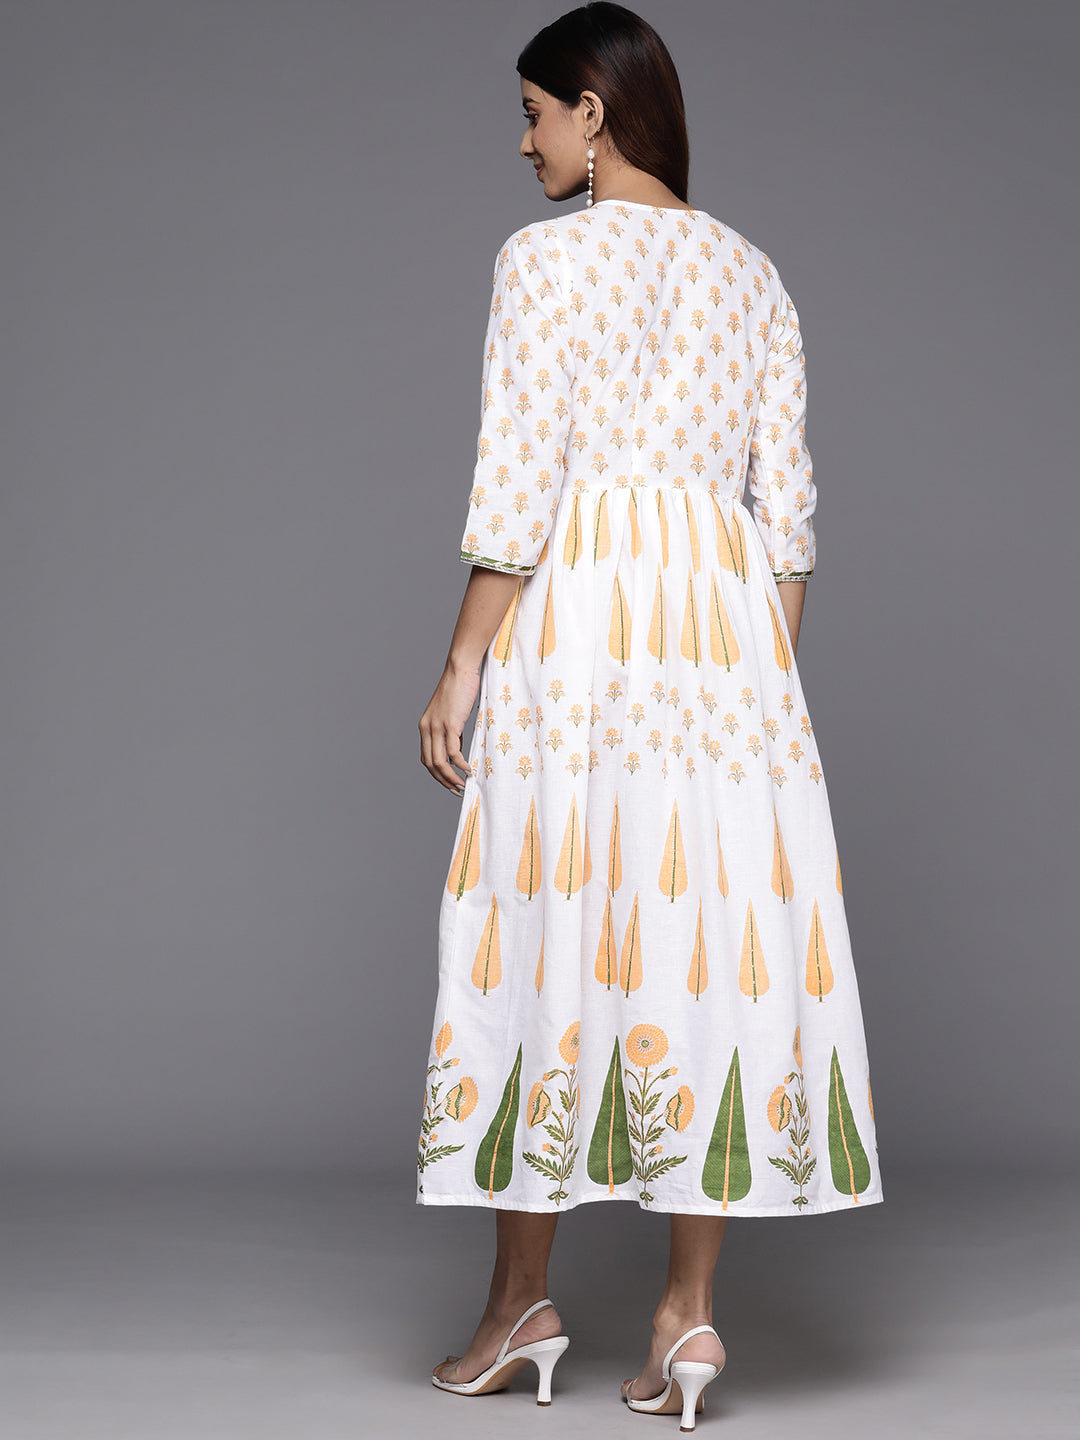 Ethnic Print Embellished Pure Cotton Empire Midi Dress